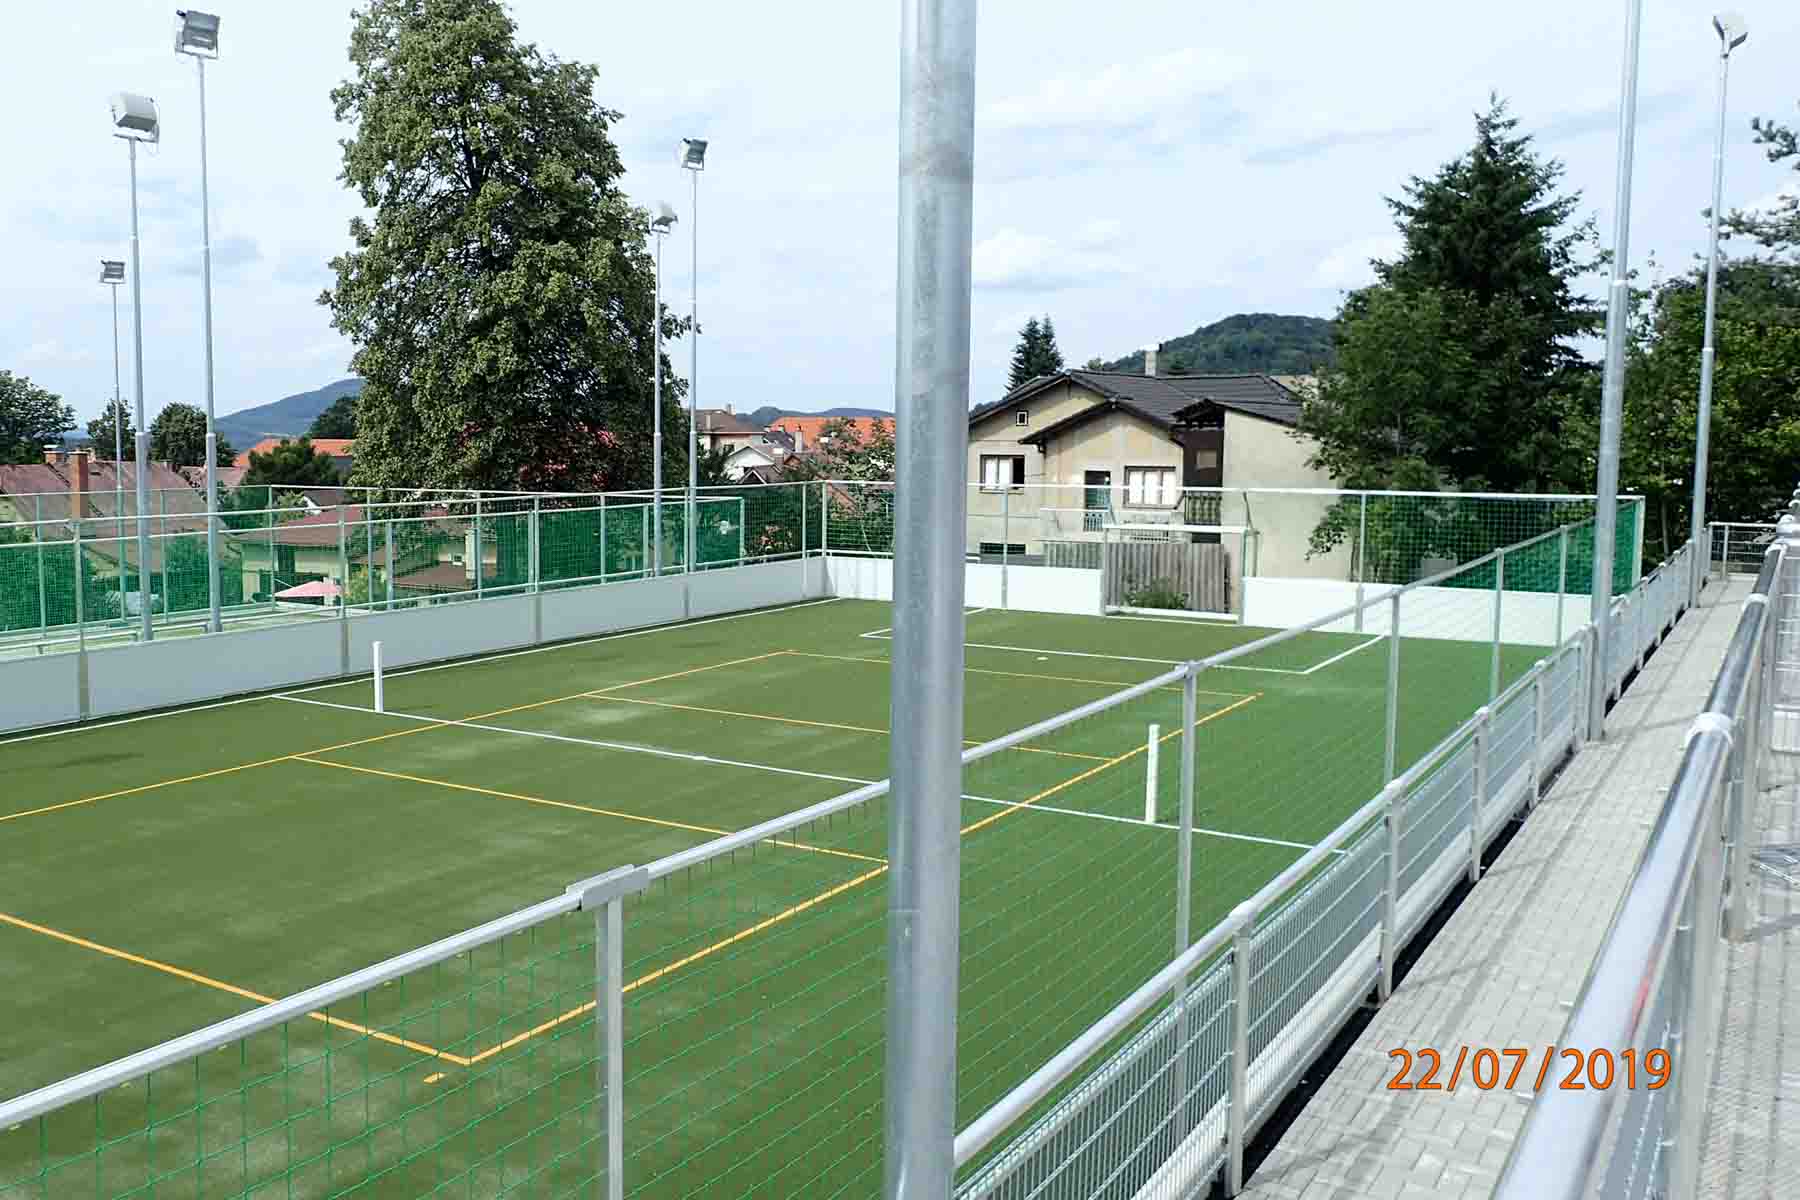 12. Rekonstrukce sportovního areálu Kamenický Šenov